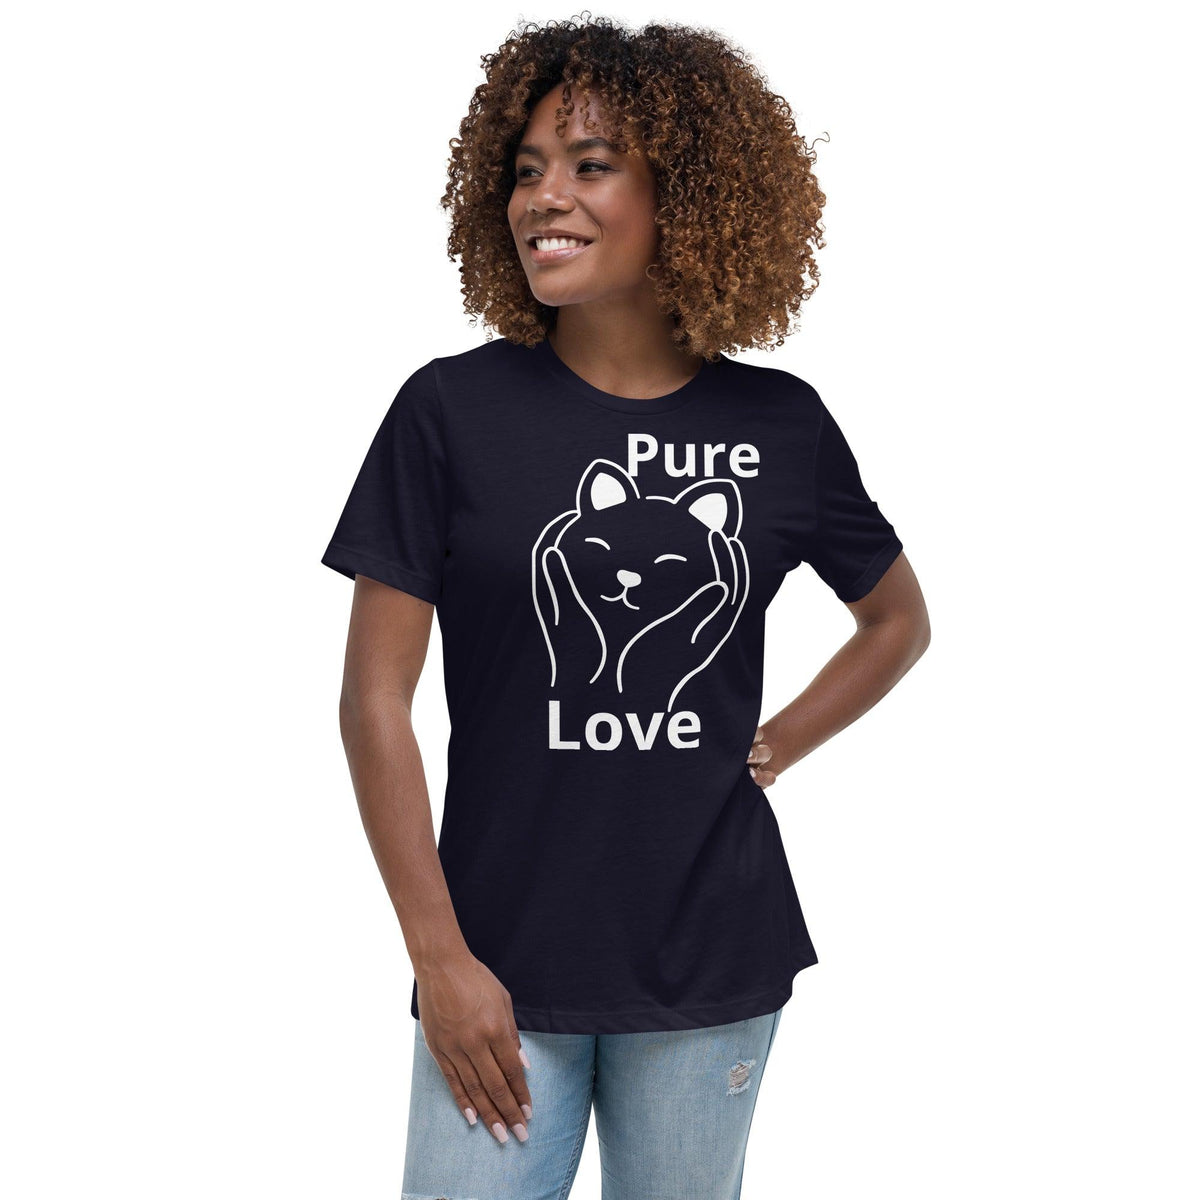 Pure Love women's T-Shirt - Eventwisecreations